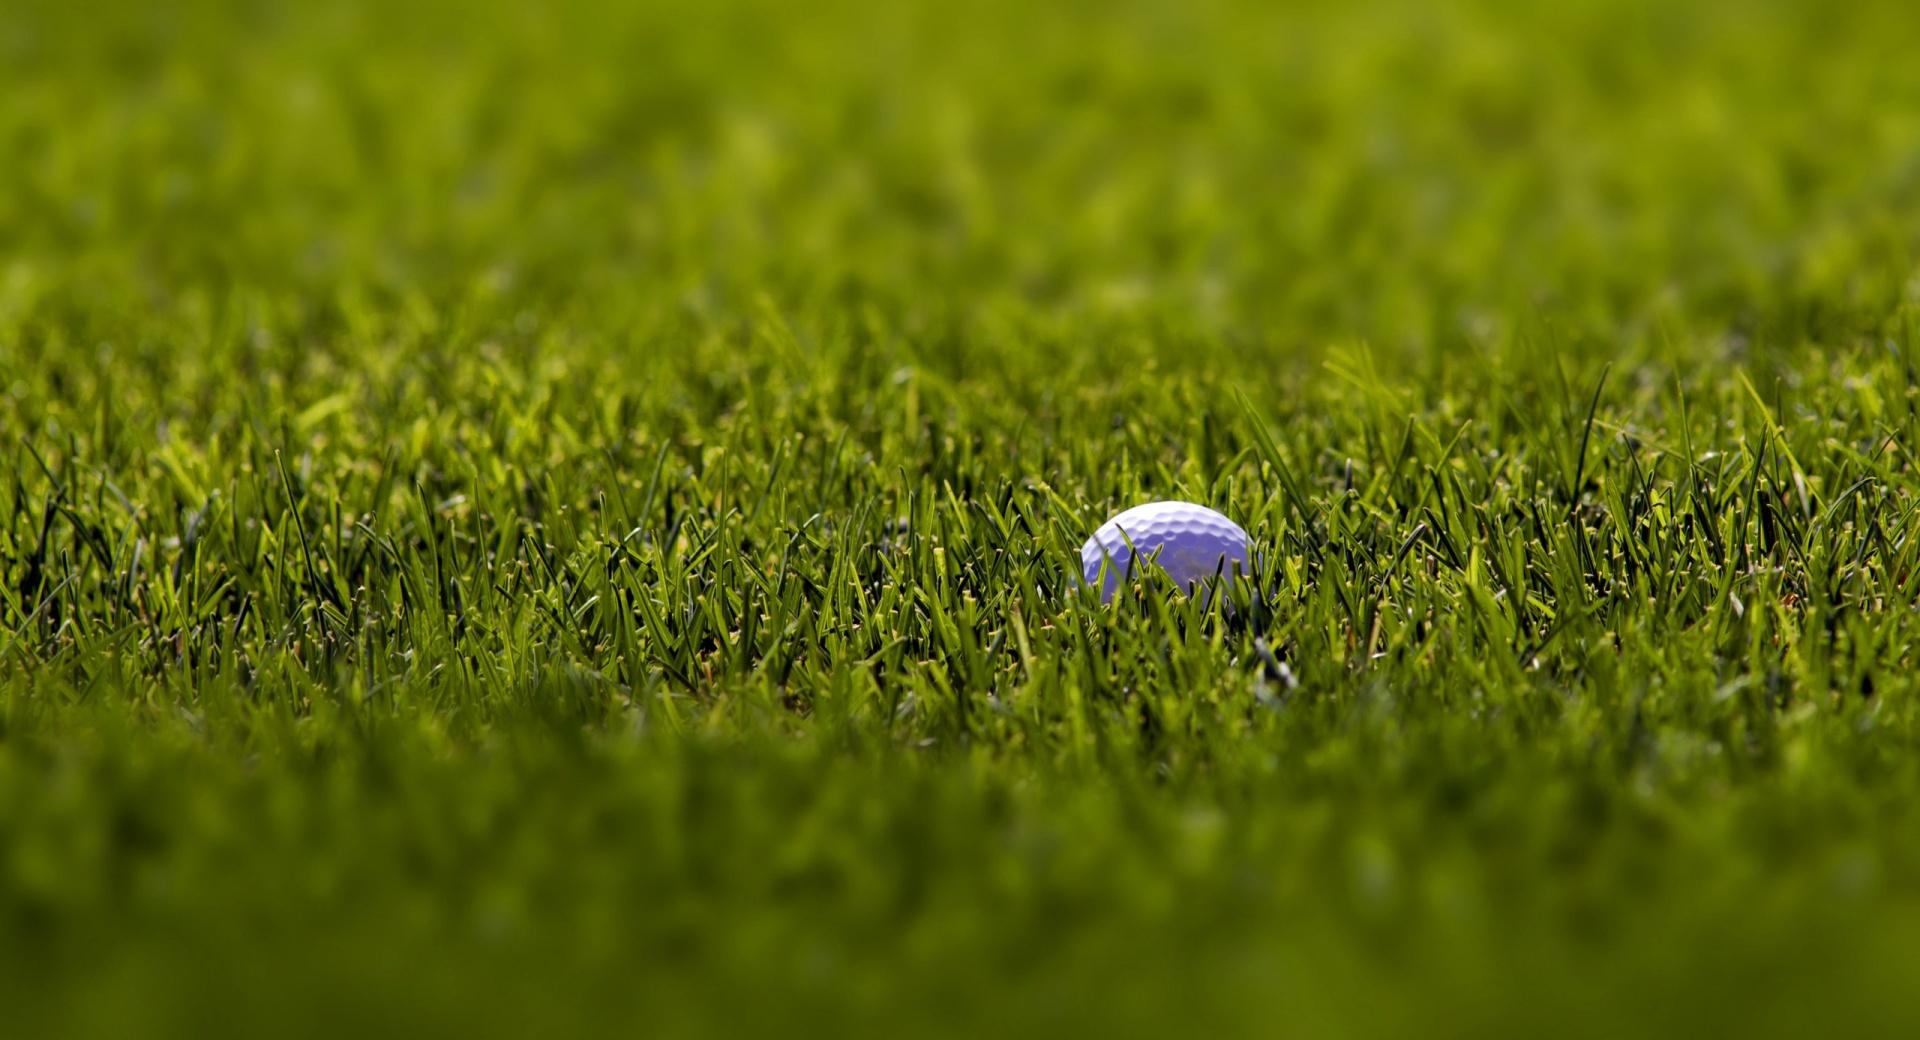 Golf Ball Macro at 1024 x 1024 iPad size wallpapers HD quality